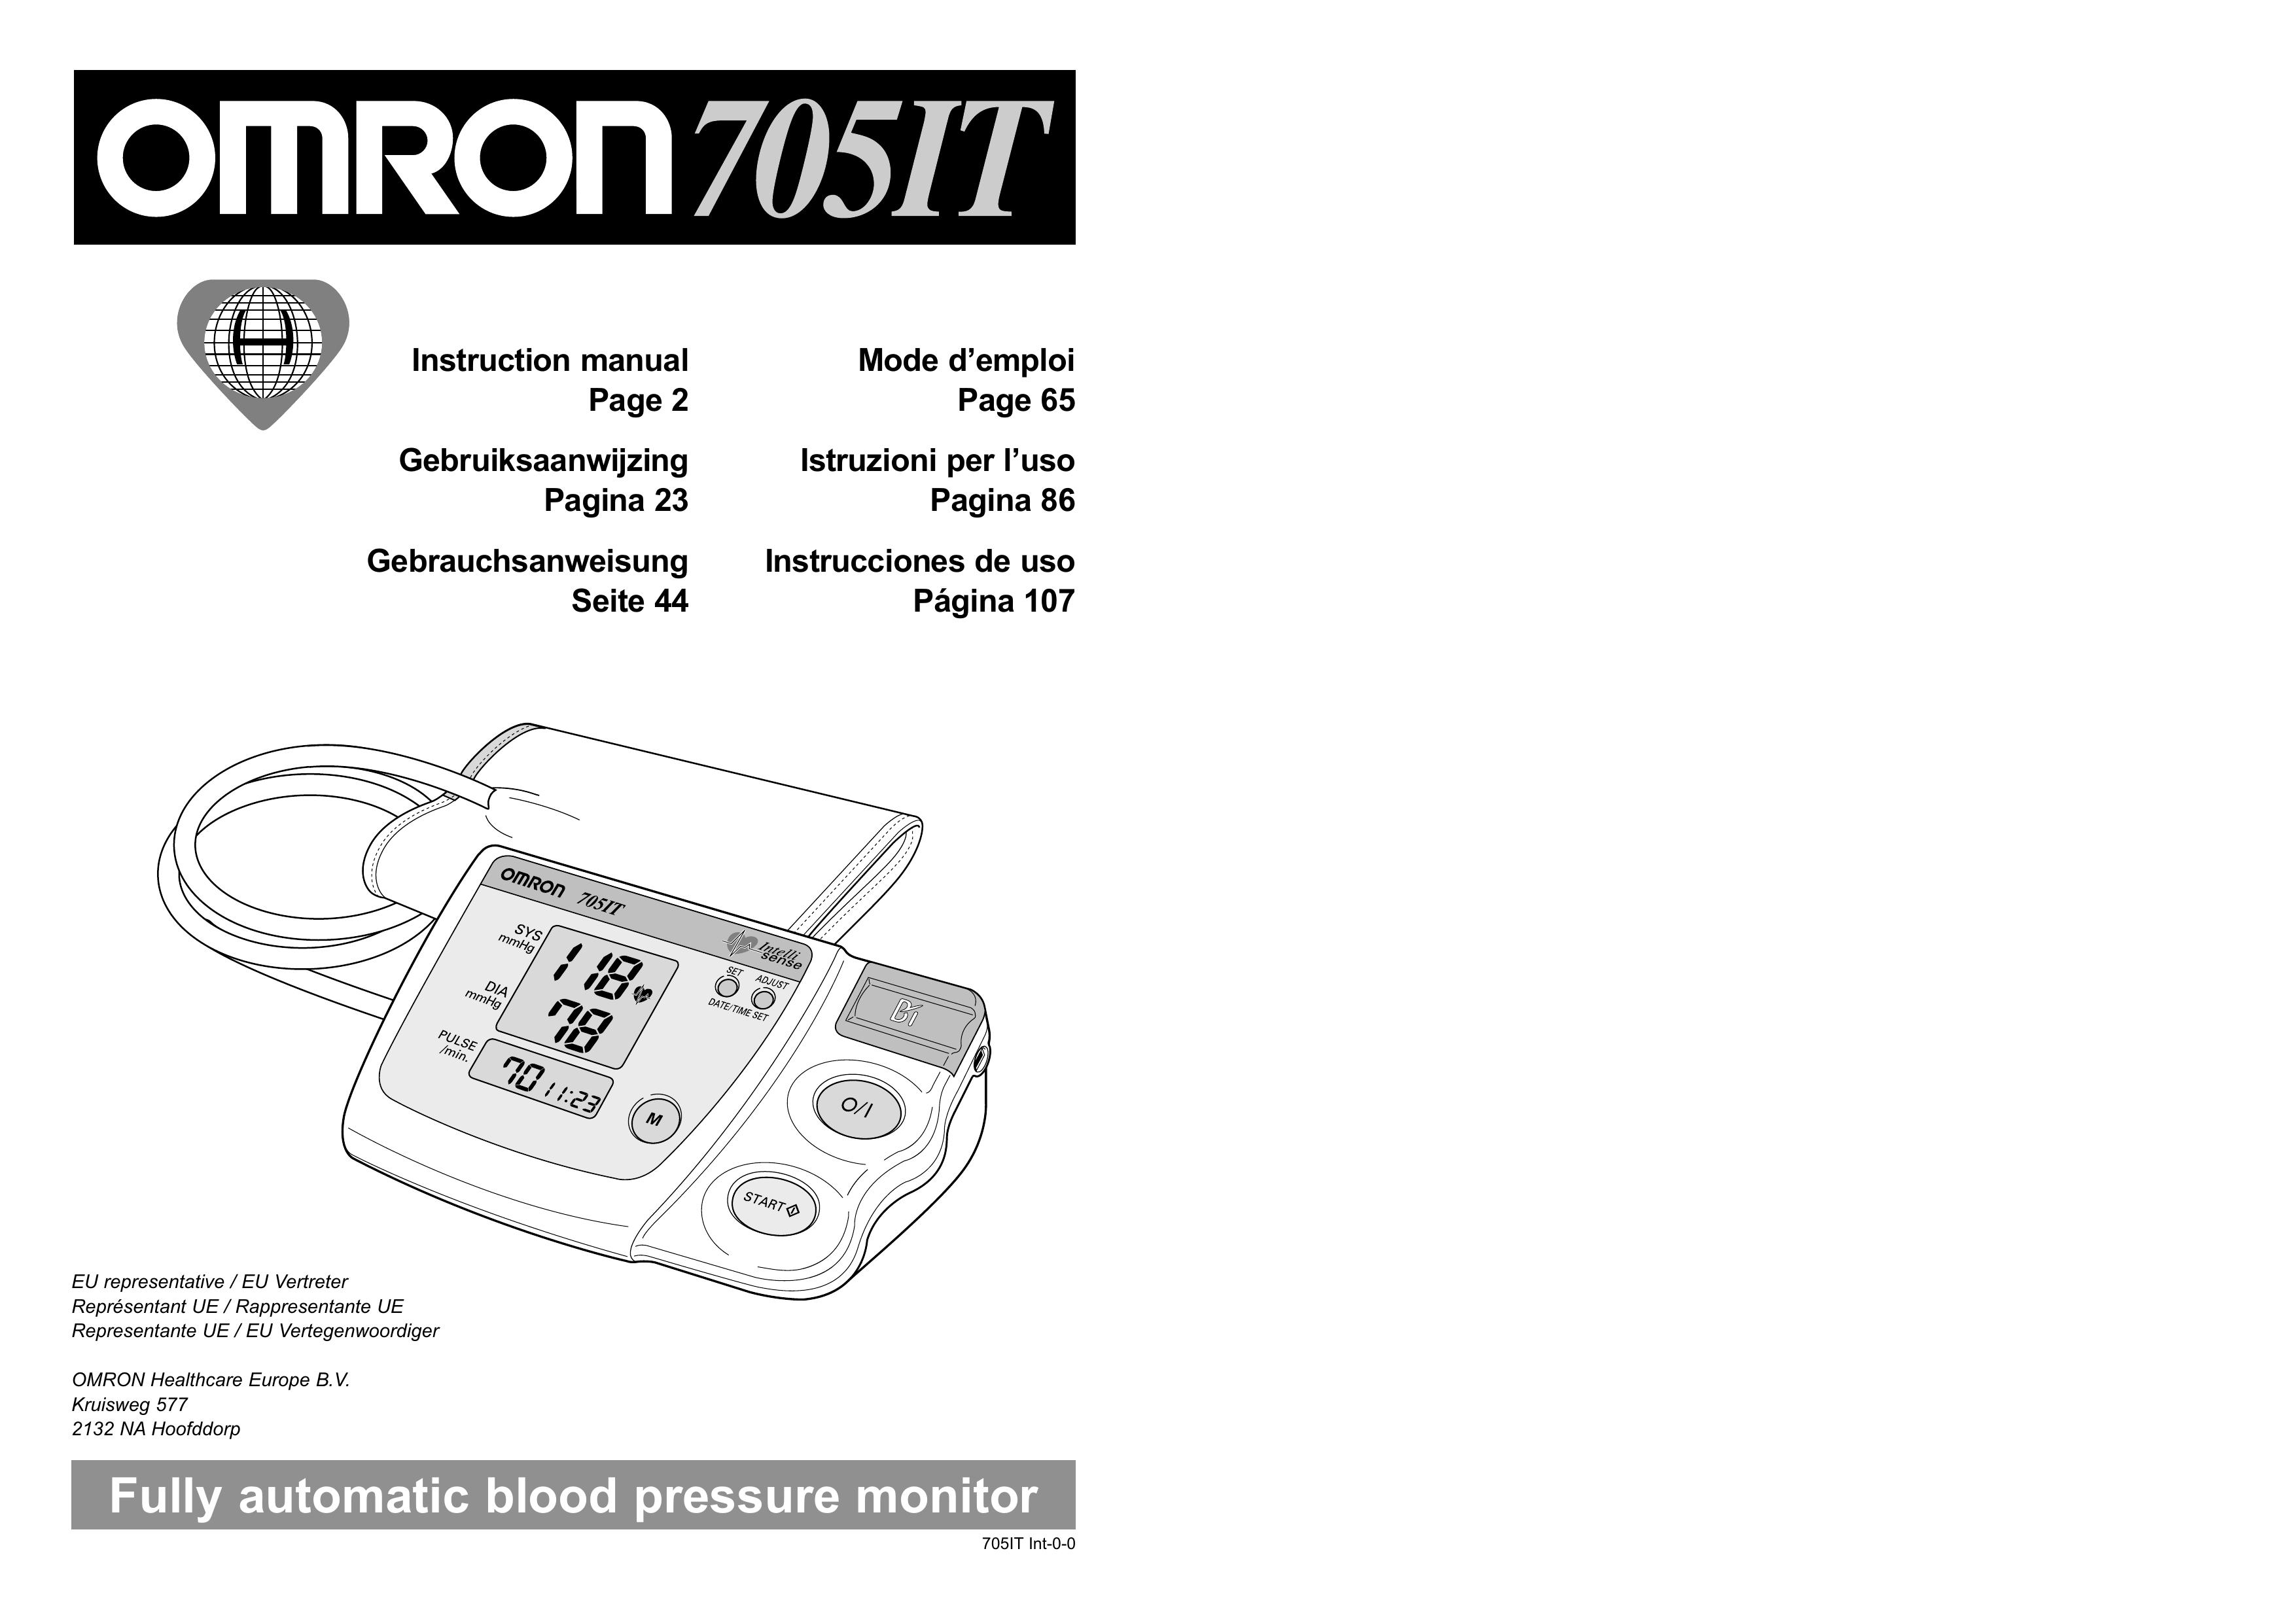 Omron 705IT Blood Pressure Monitor User Manual